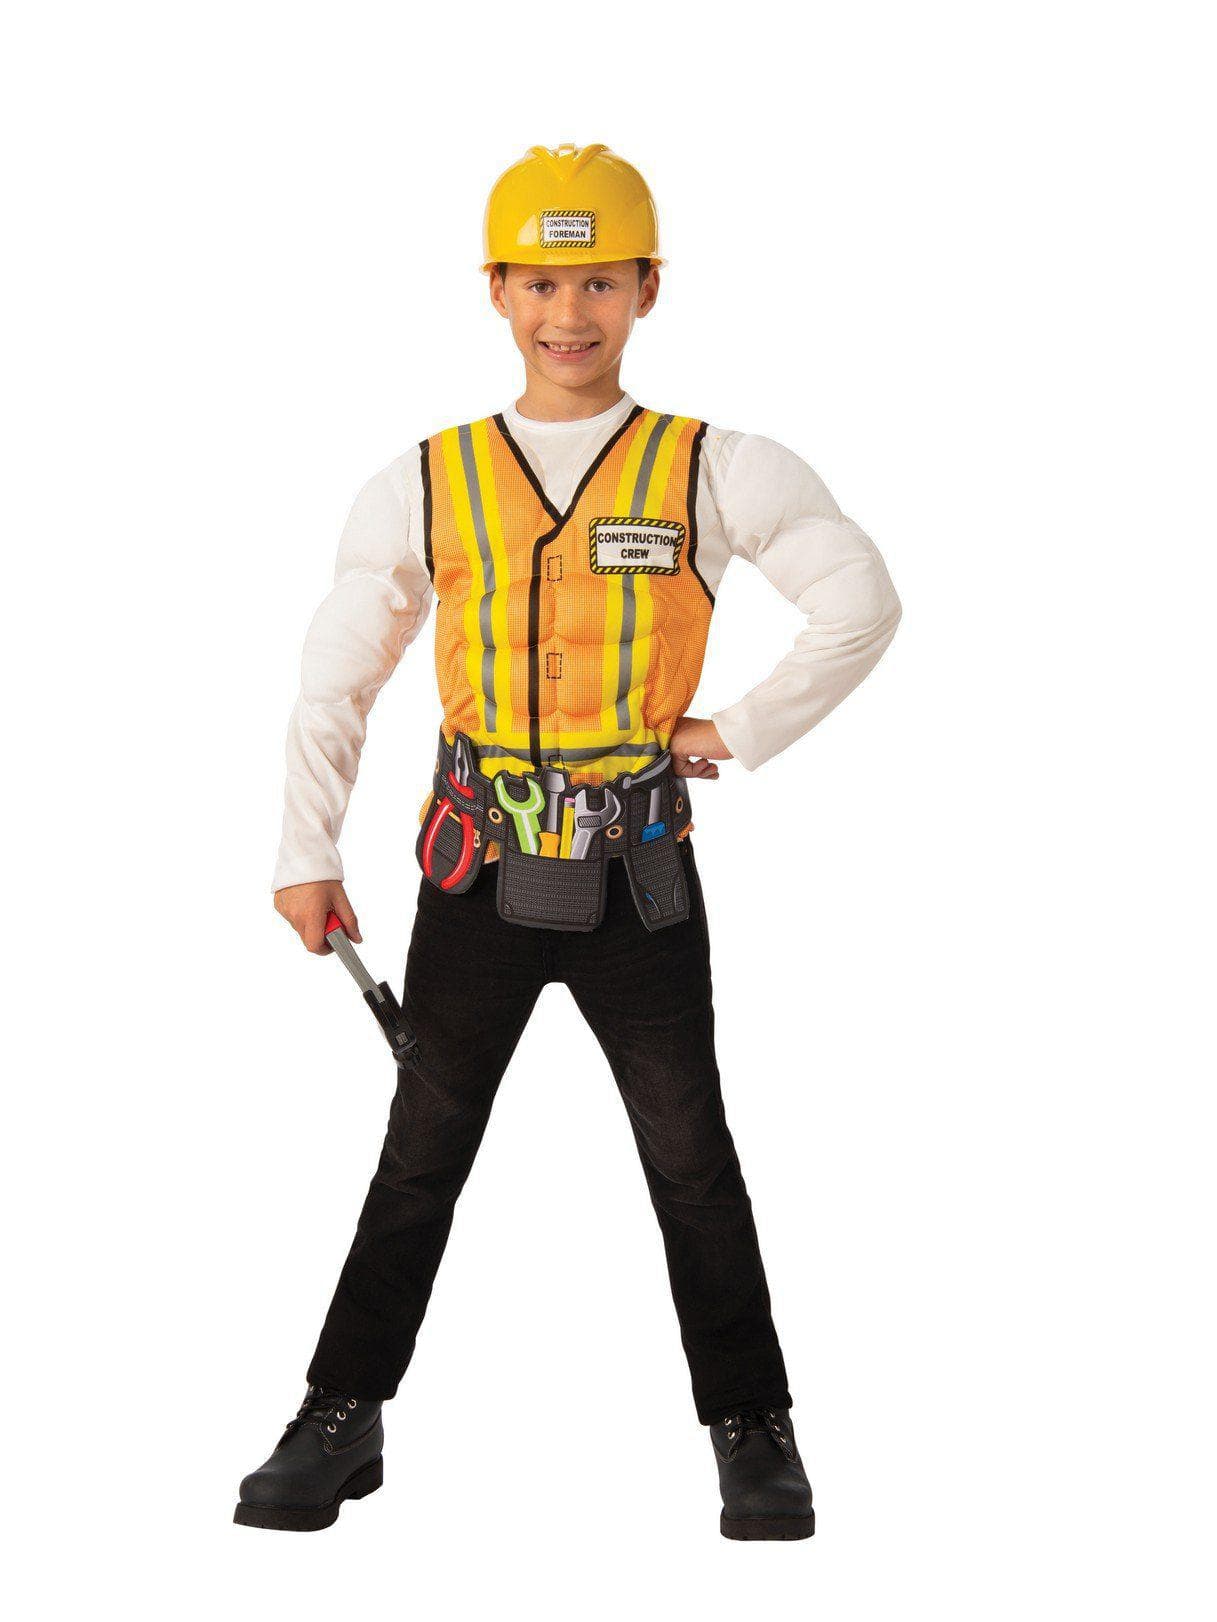 Kids Construction Worker Costume - costumes.com